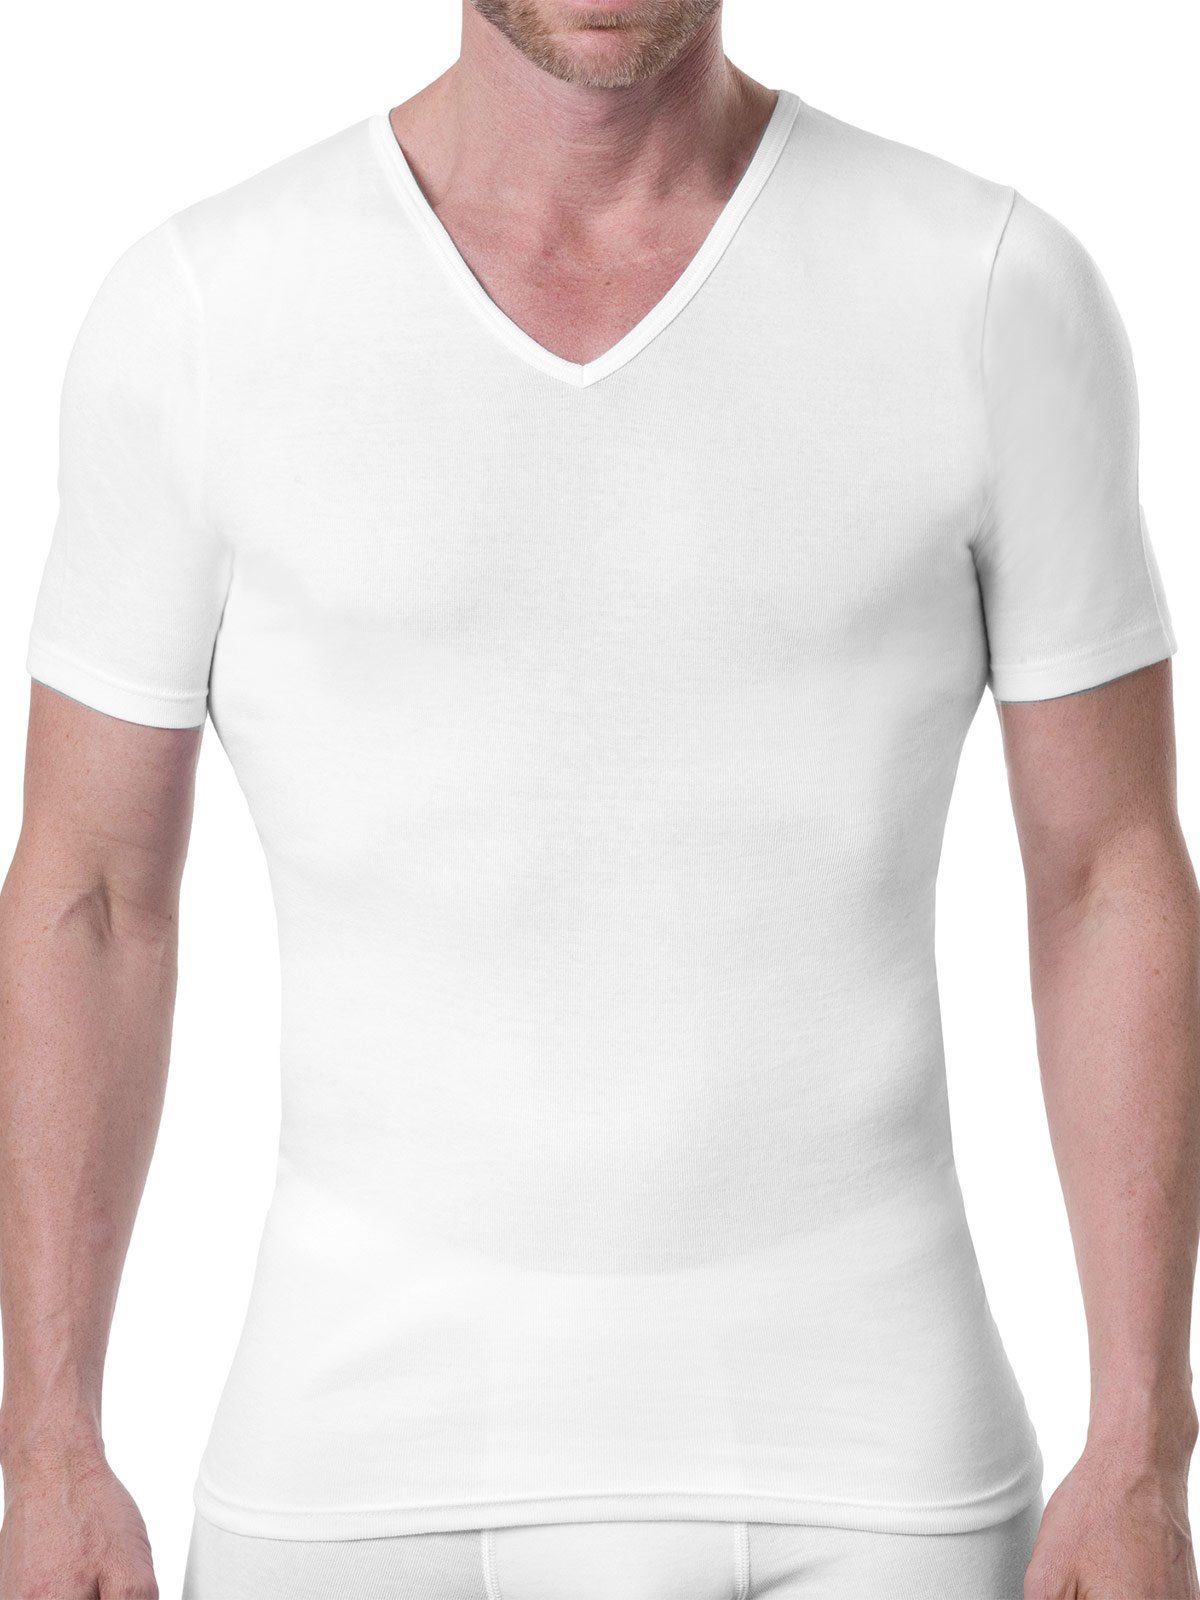 KUMPF Unterziehshirt 8er Sparpack Herren (Spar-Set, 8-St) T-Shirt Markenqualität steingrau-melange weiss hohe Bio Cotton